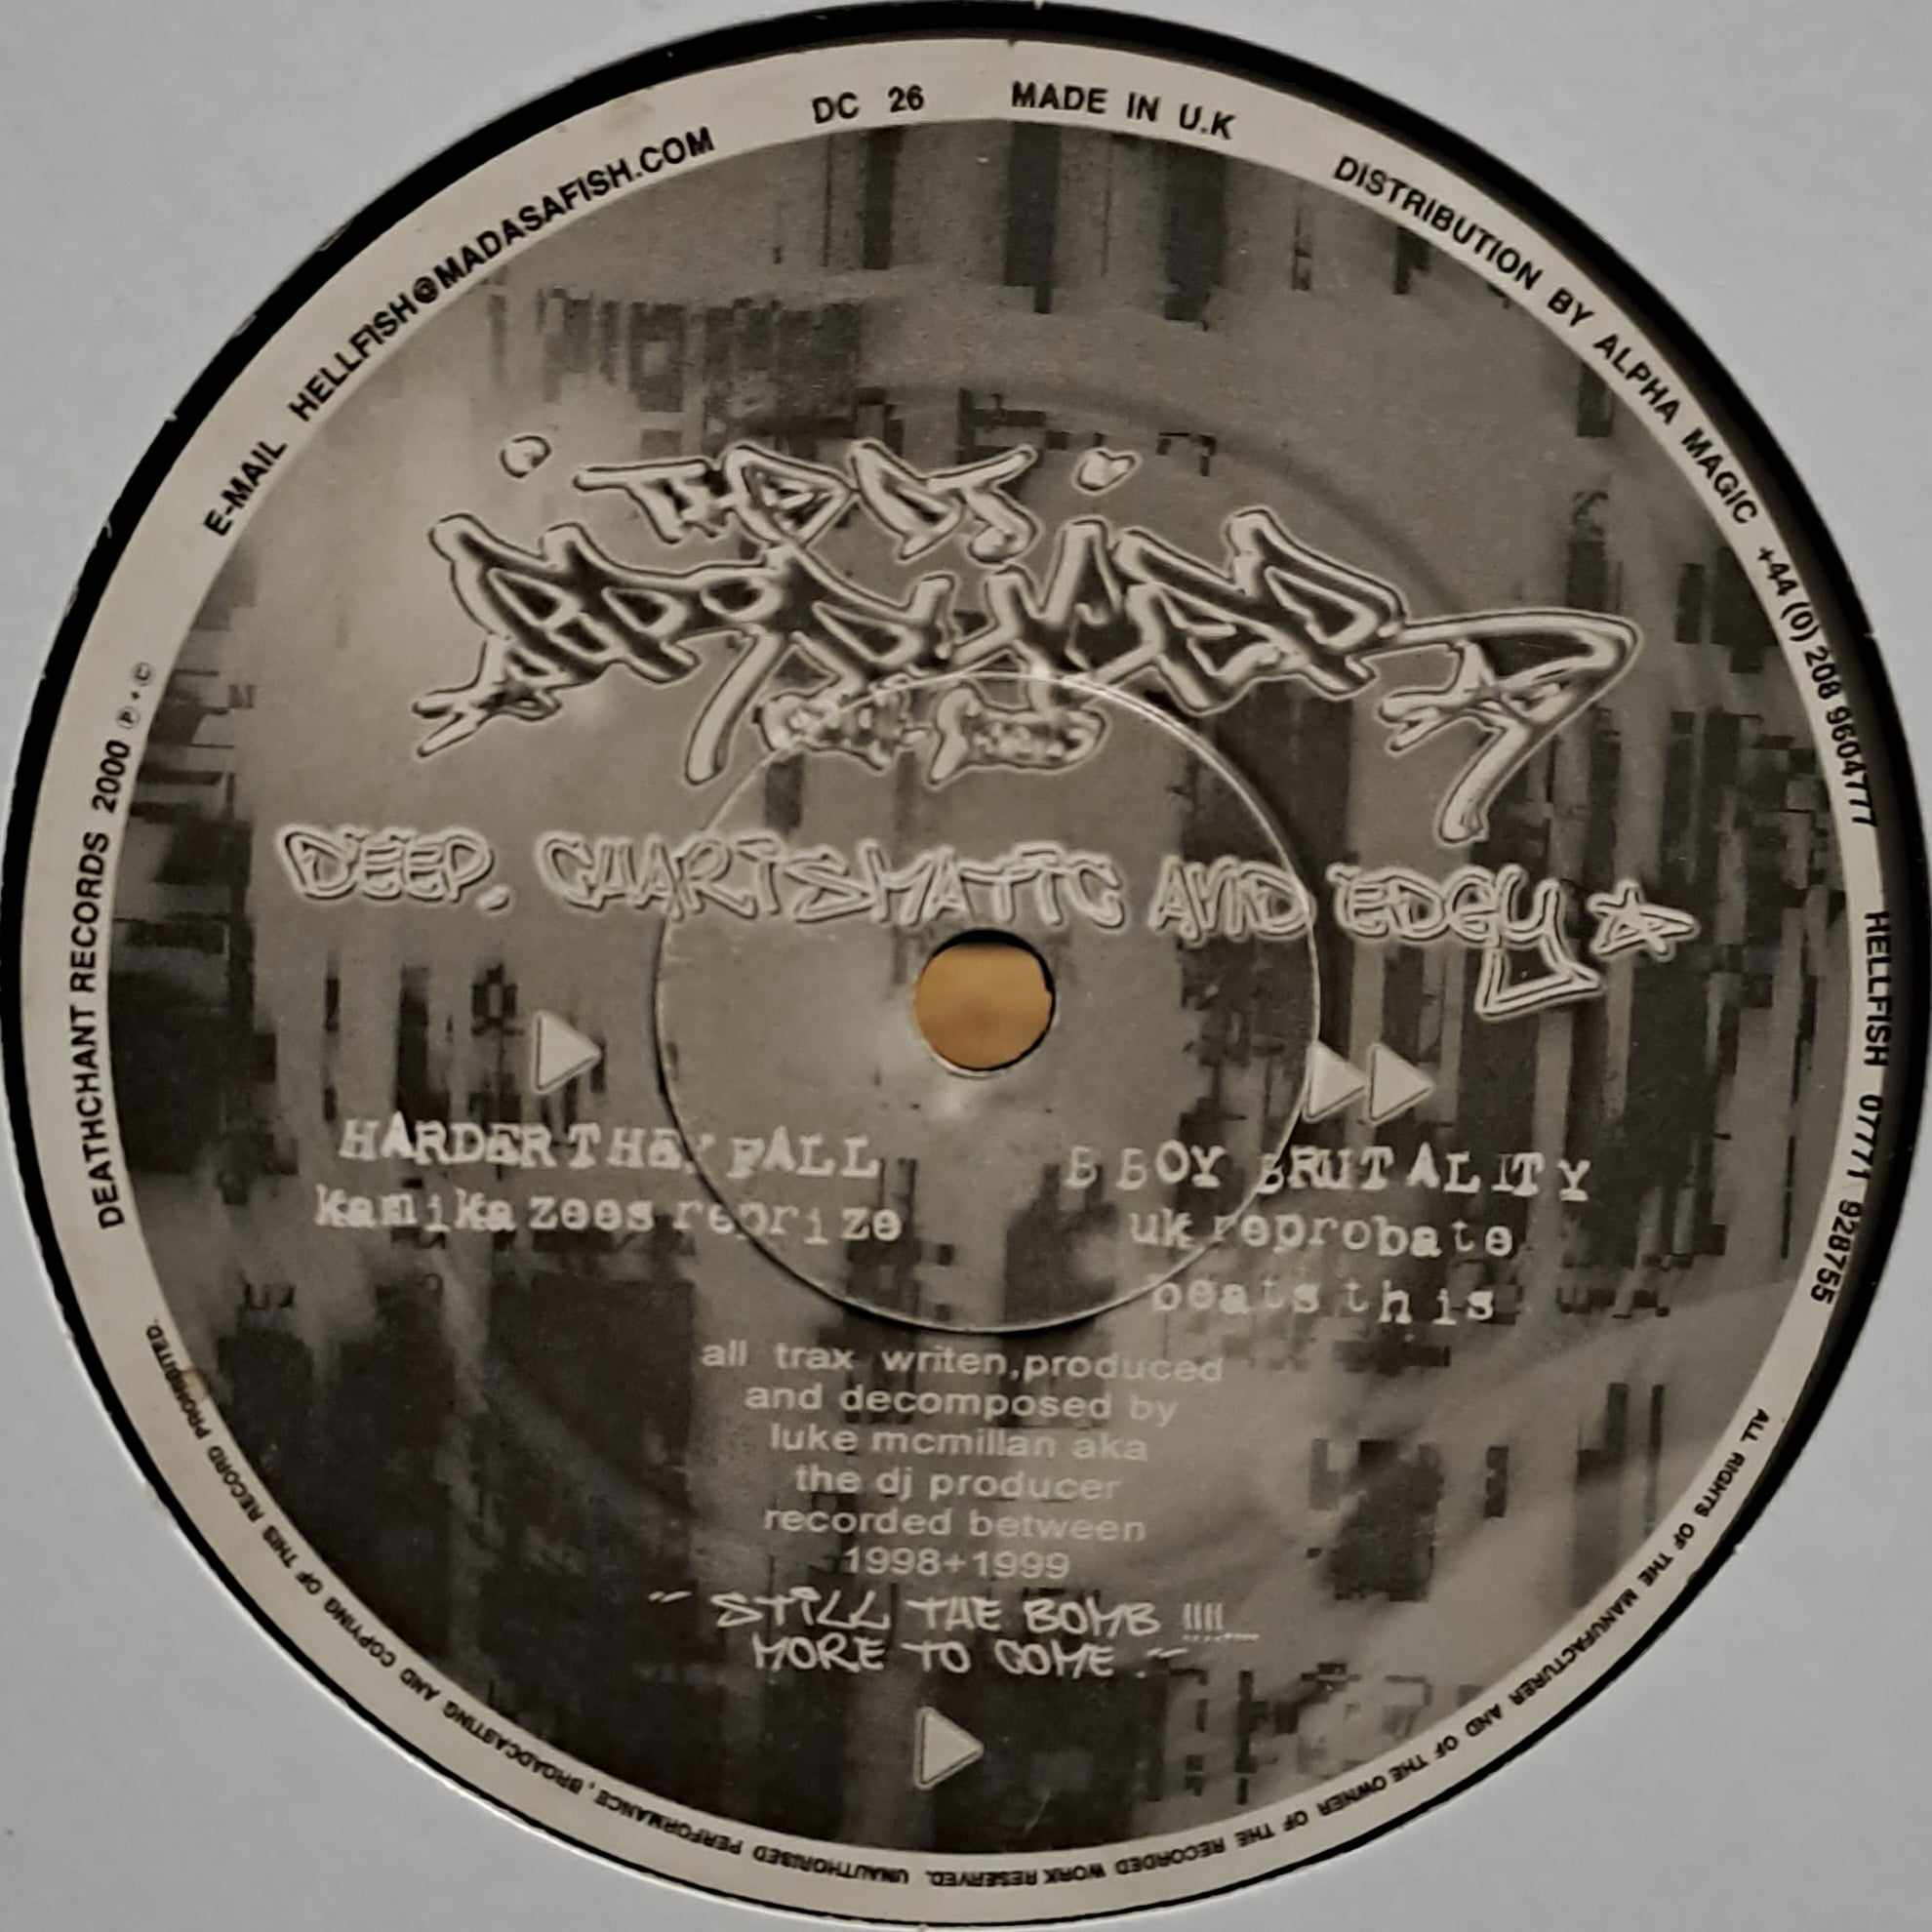 Deathchant 26 - vinyle hardcore